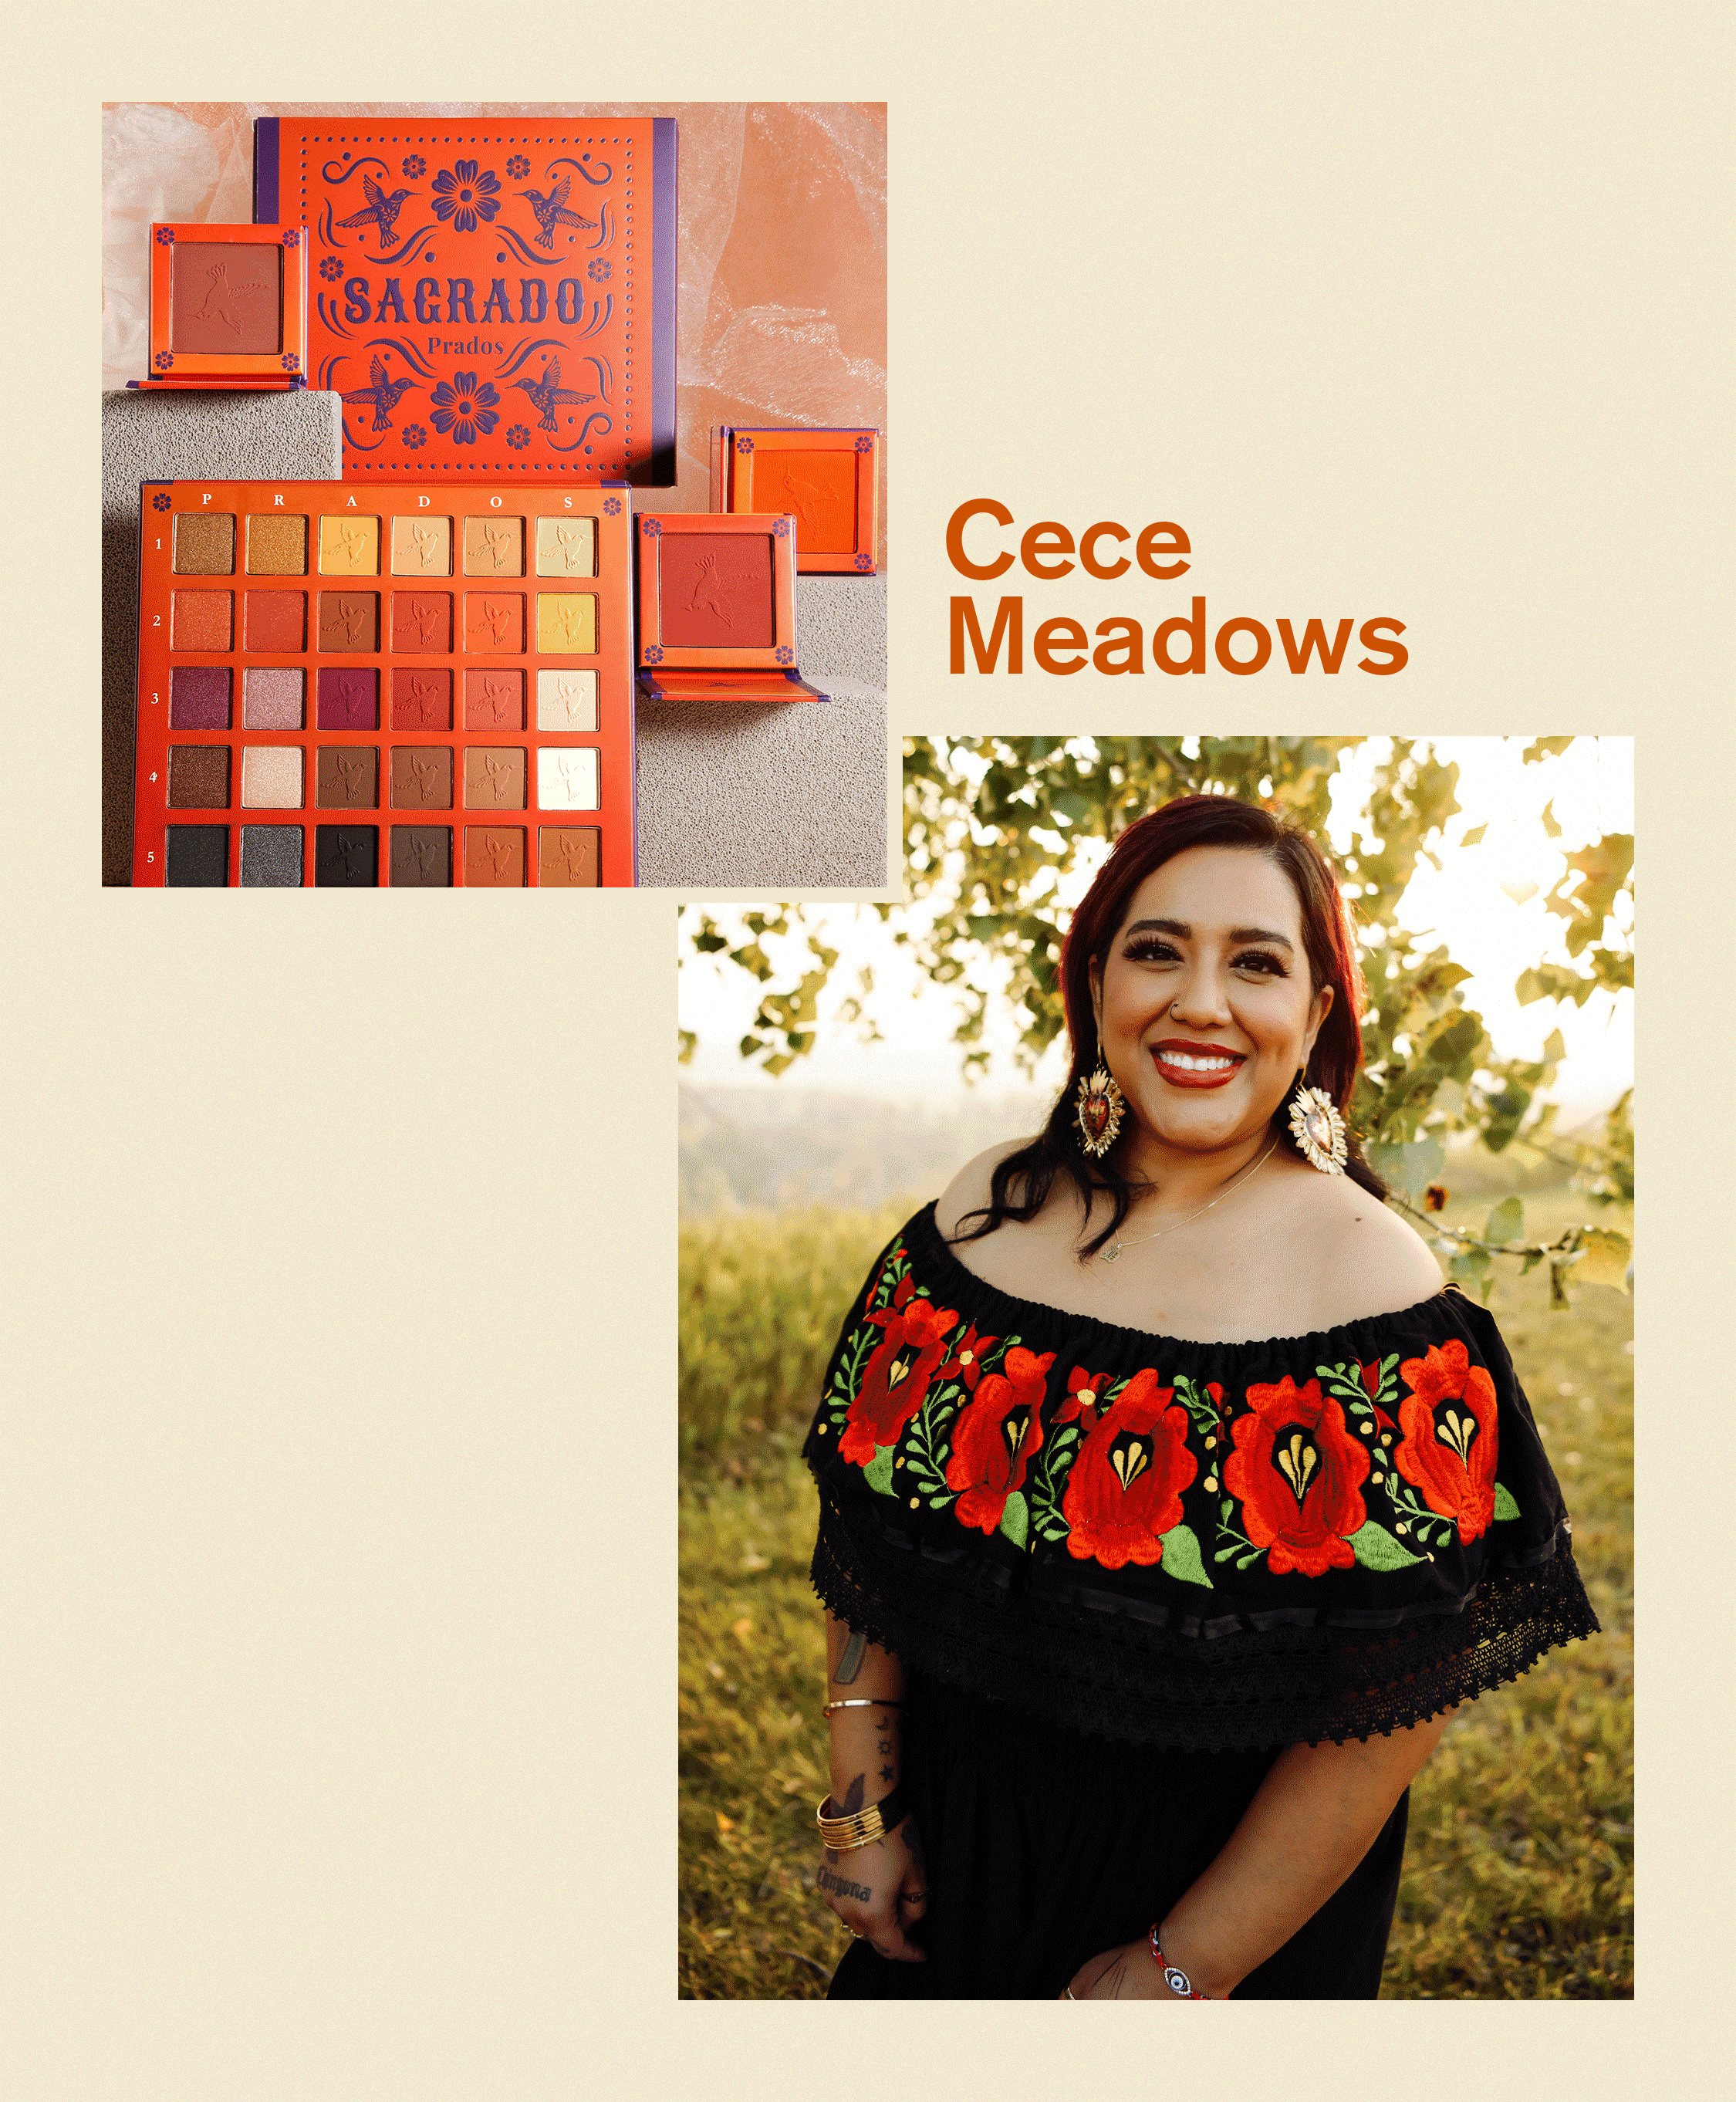 Prados Beauty Founder Cece Meadows